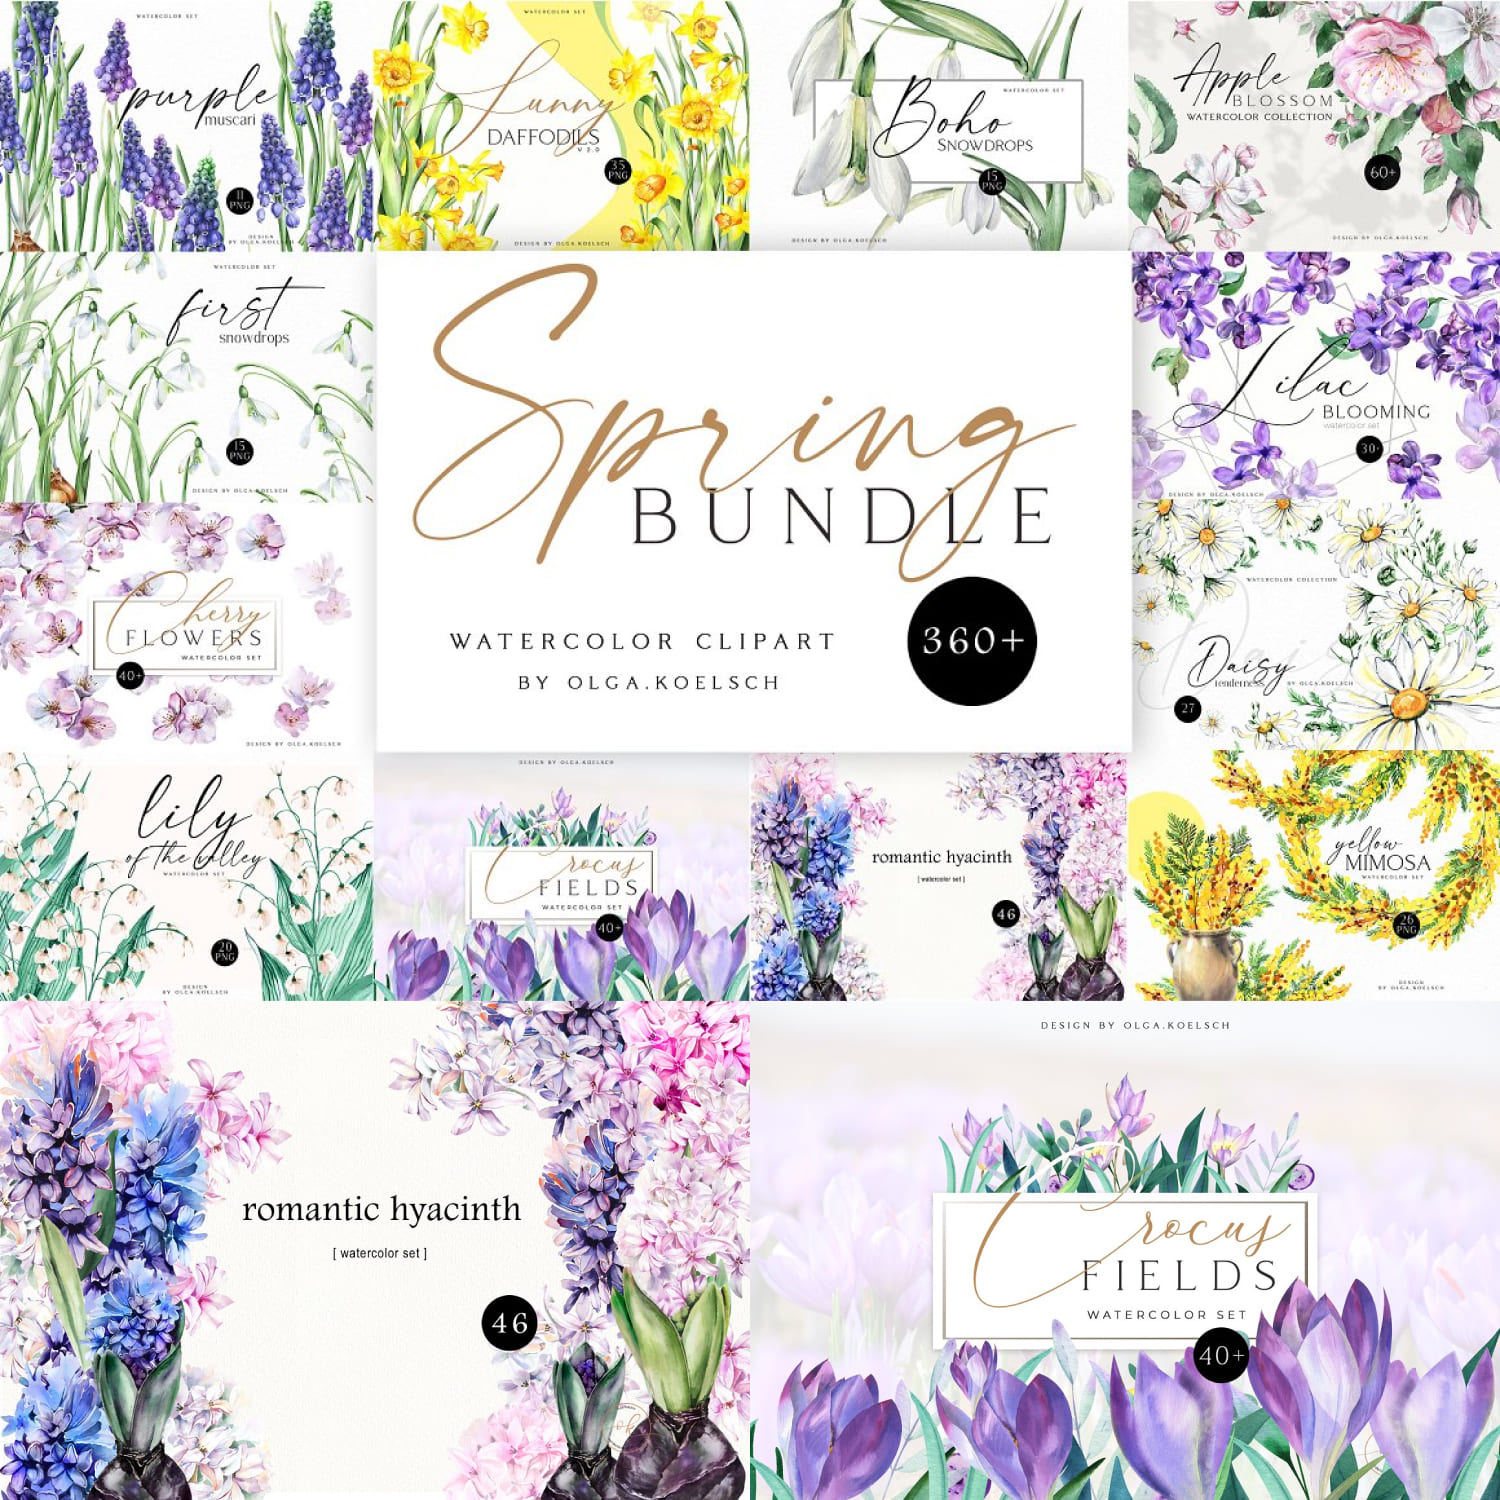 Spring Flowers Bundle cover image.